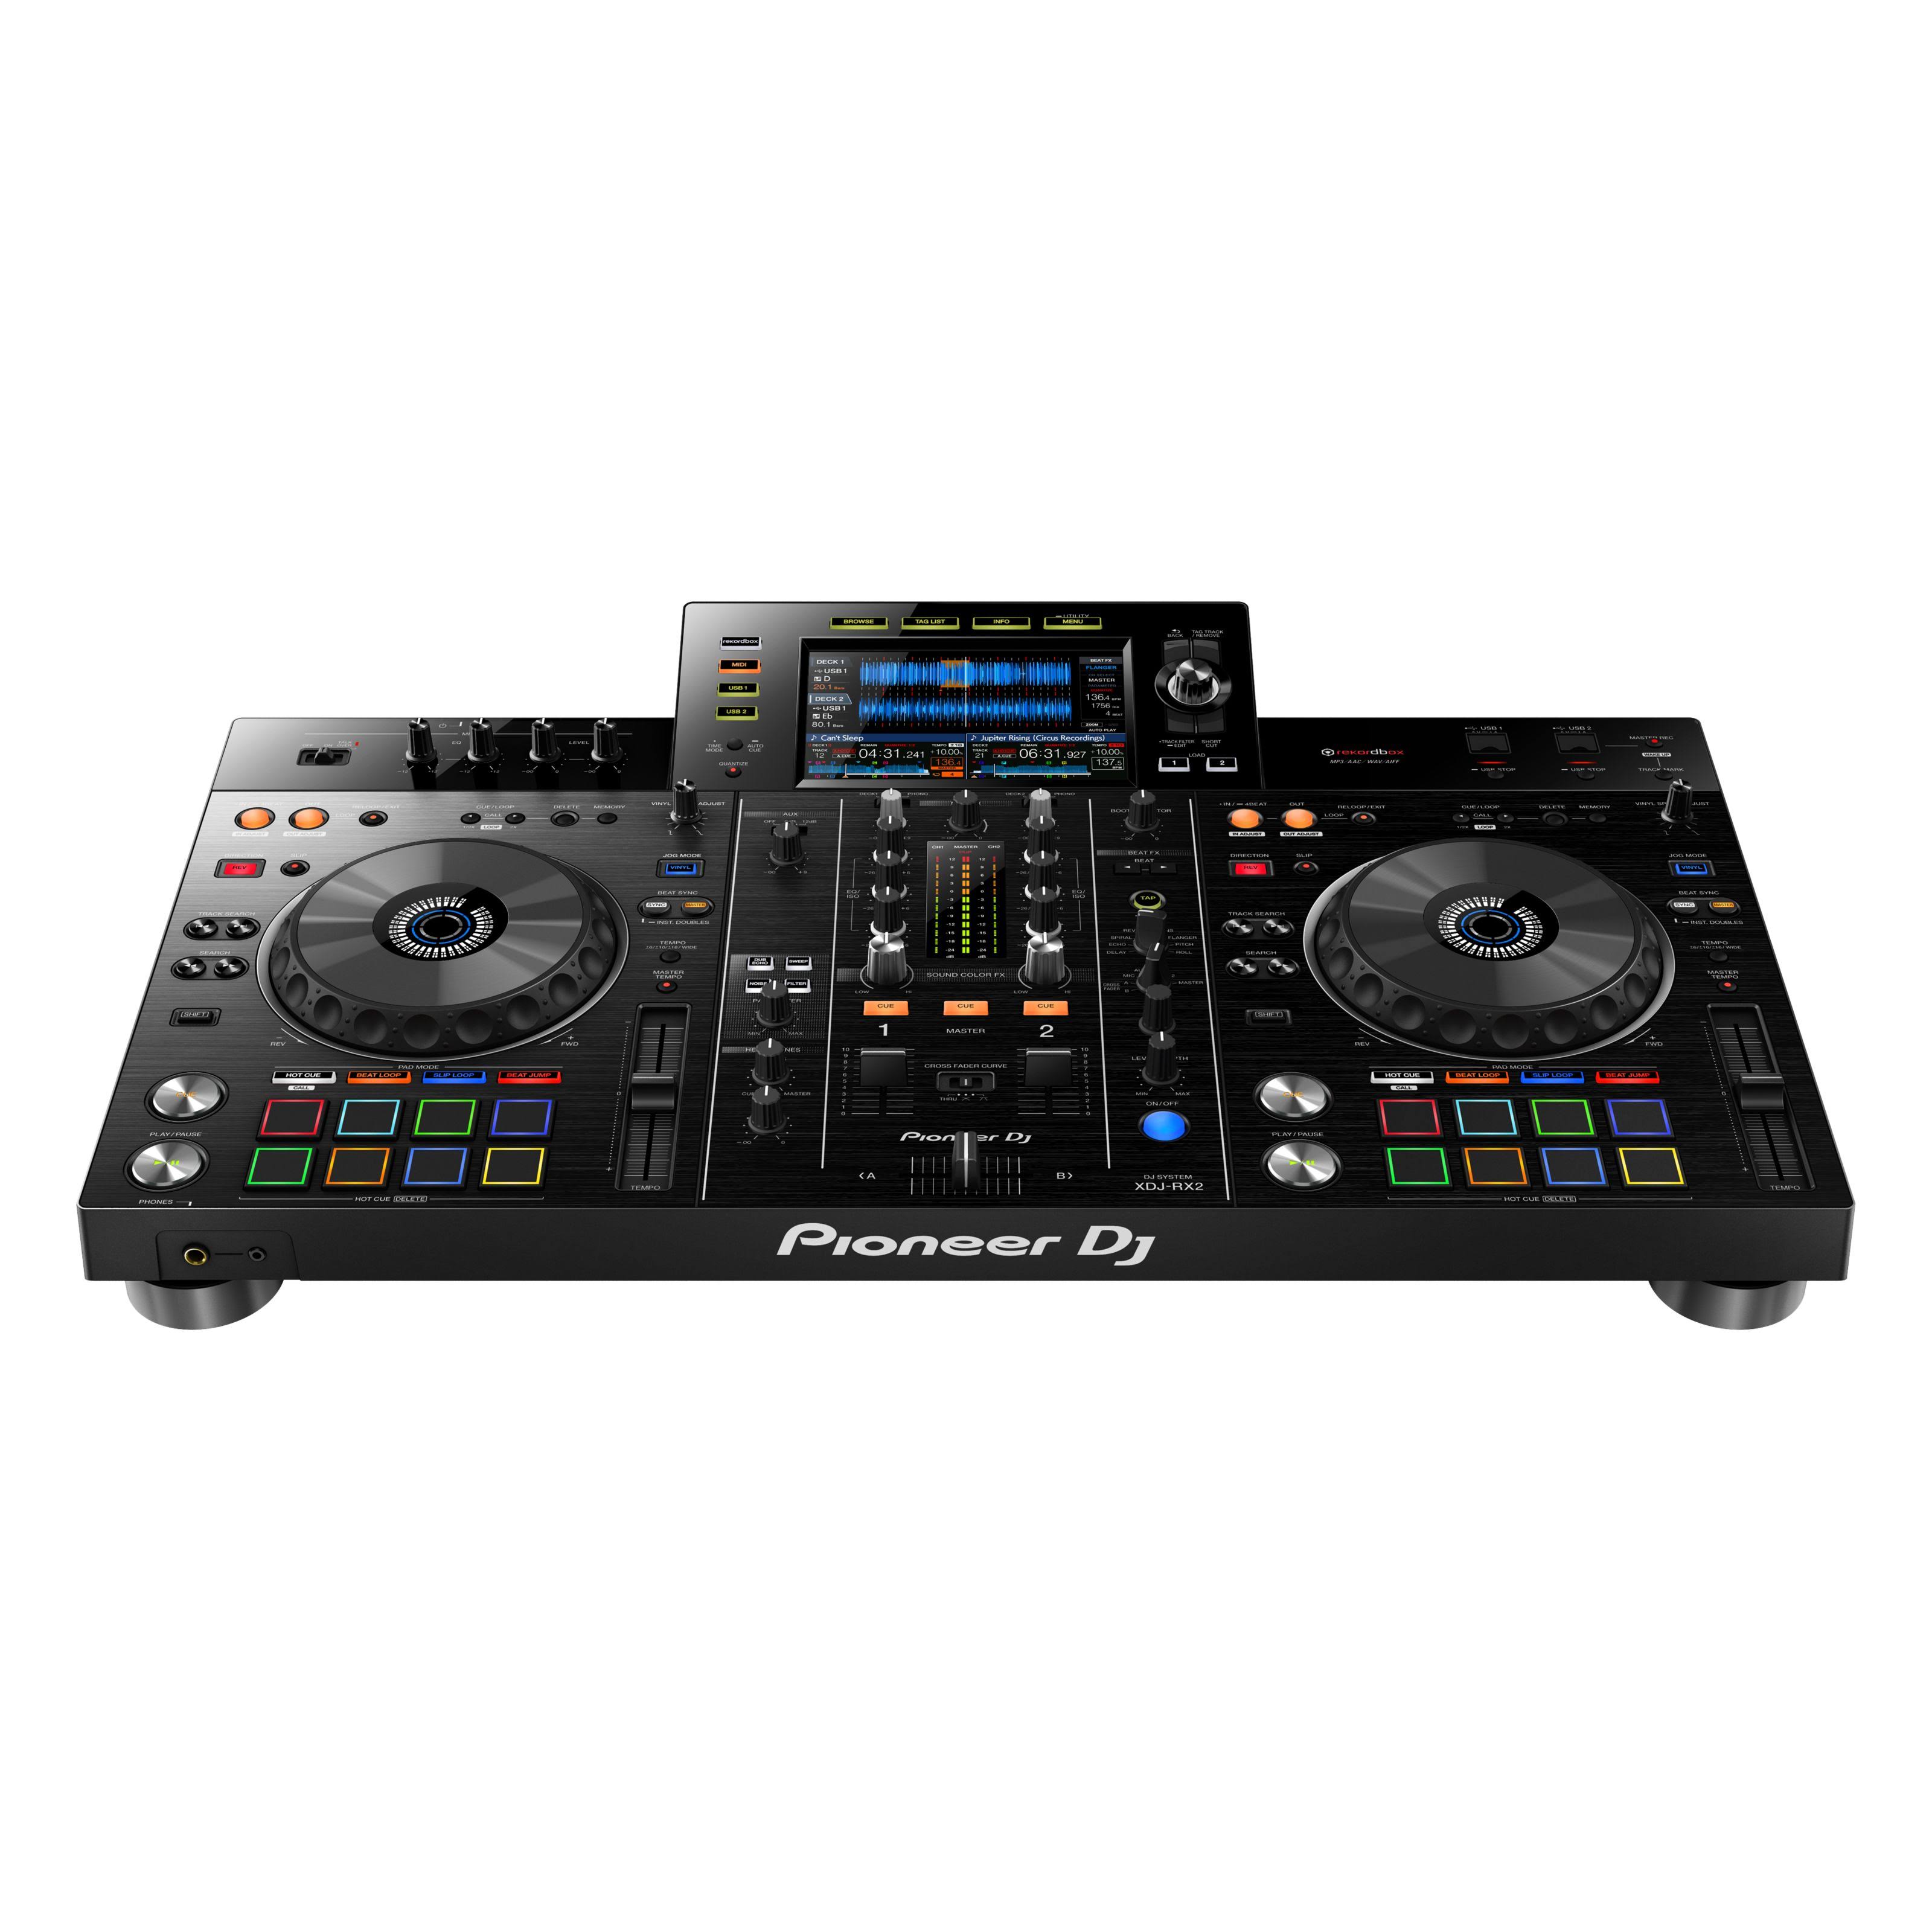 Pioneer DJ - XDJ-RX2 (Rekordbox All In One Controller)